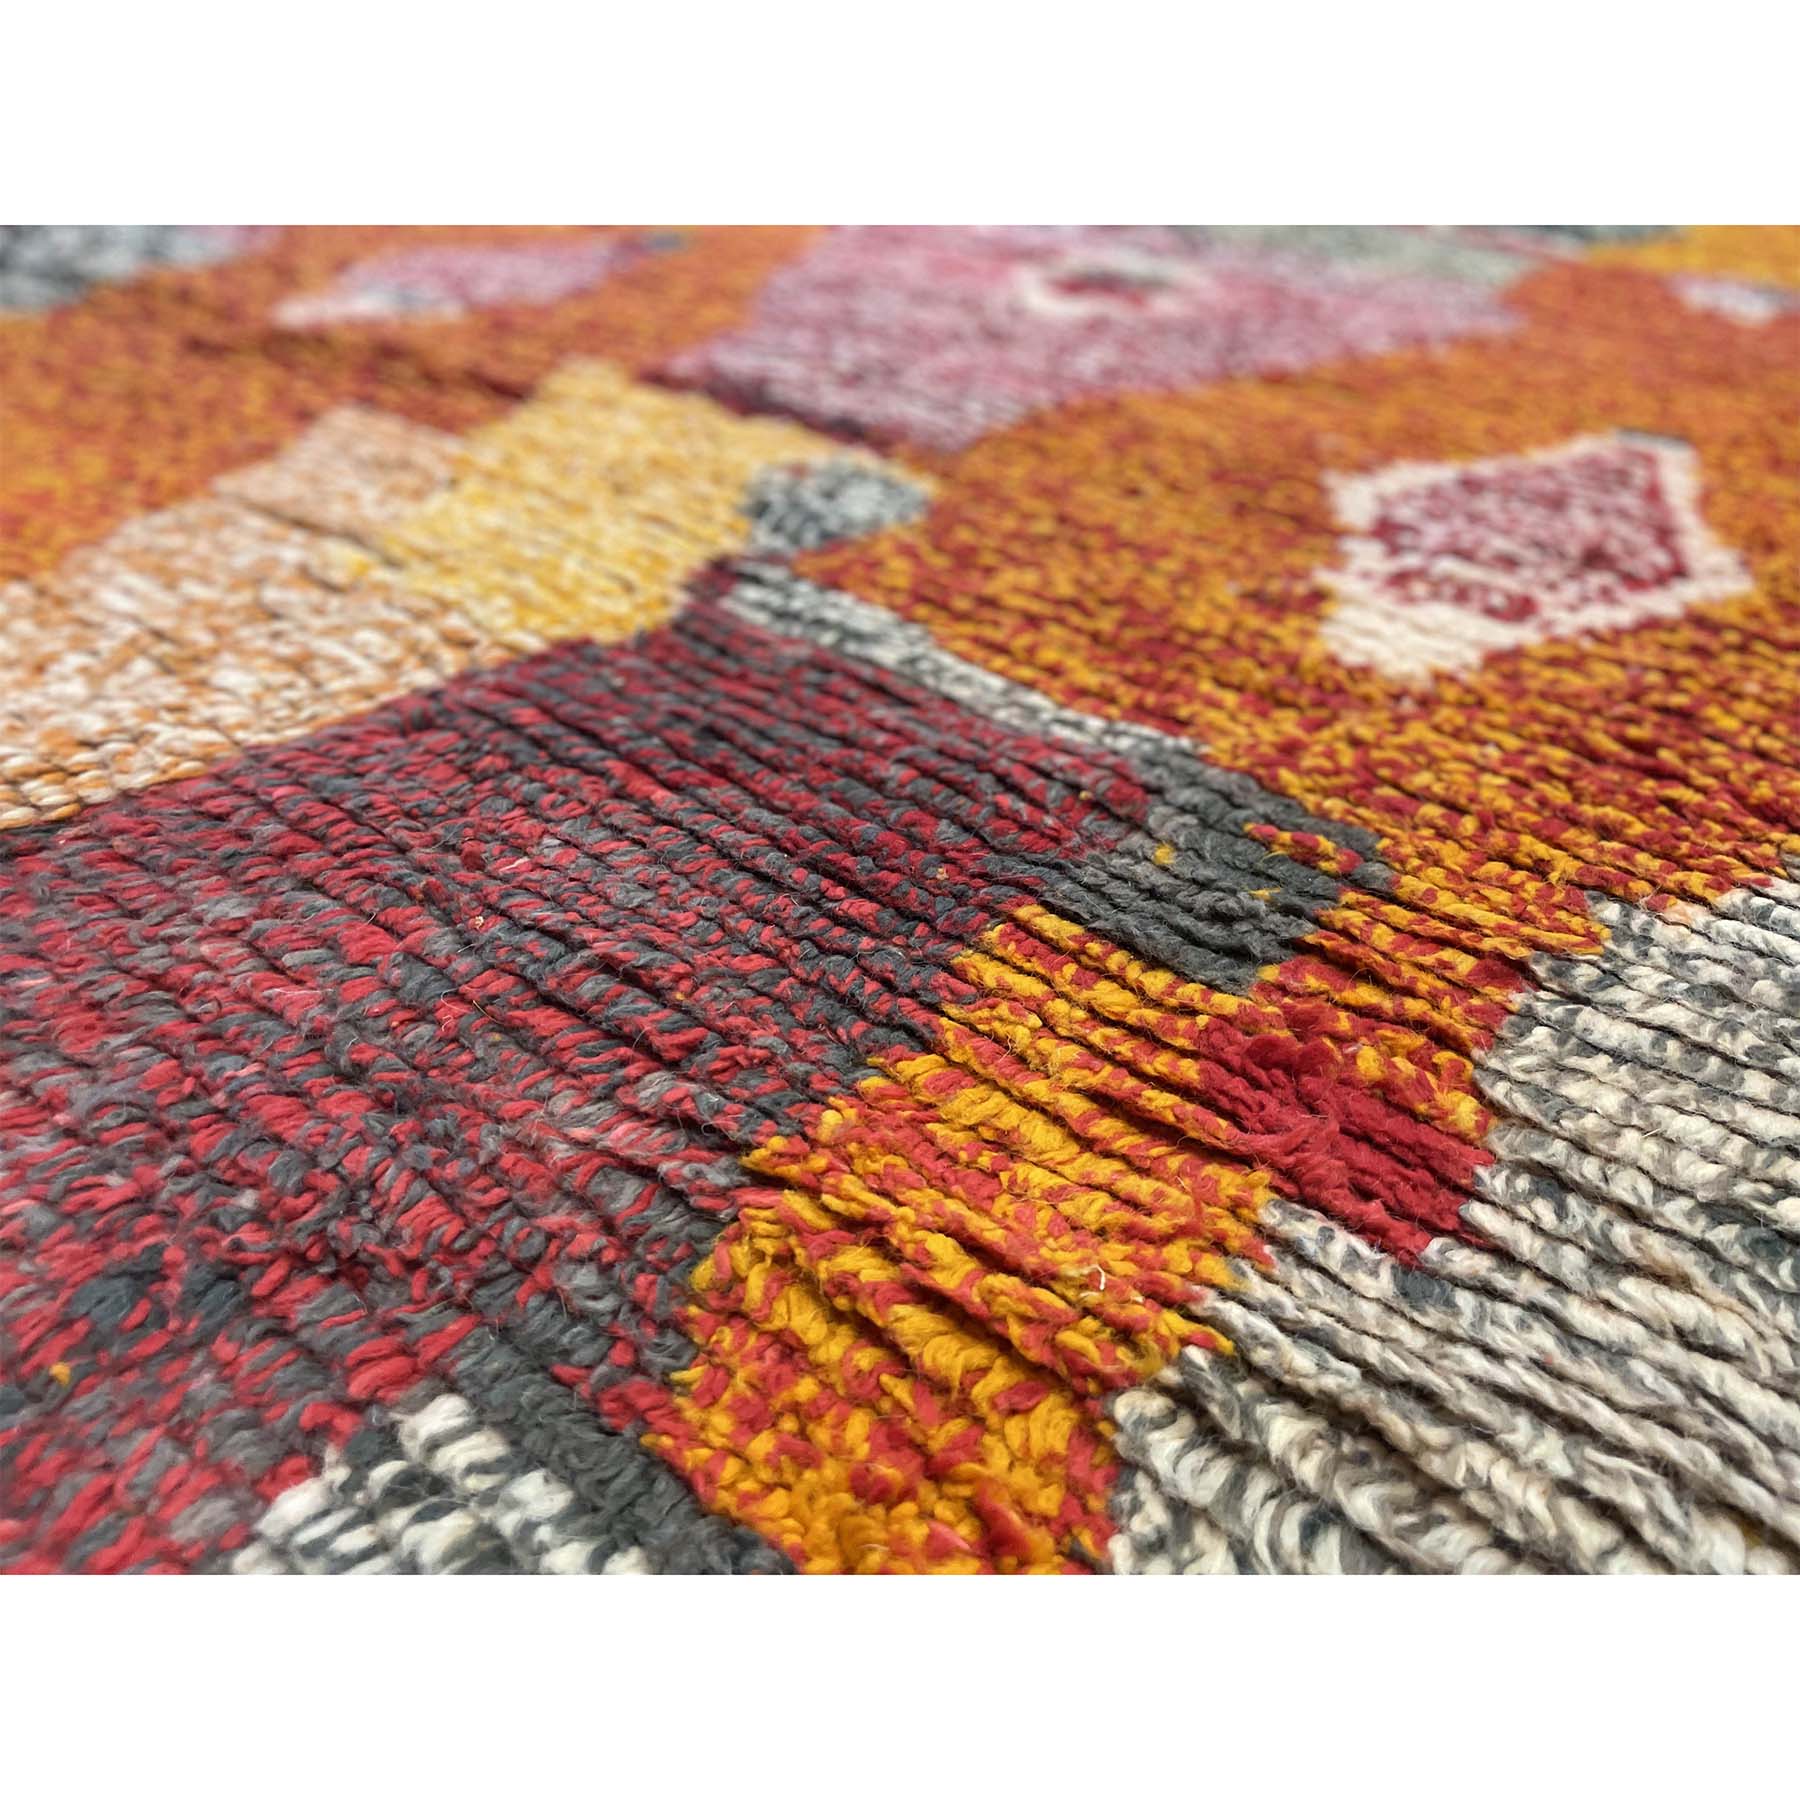 Handknotted boho chic Moroccan area rug - Kantara | Moroccan Rugs